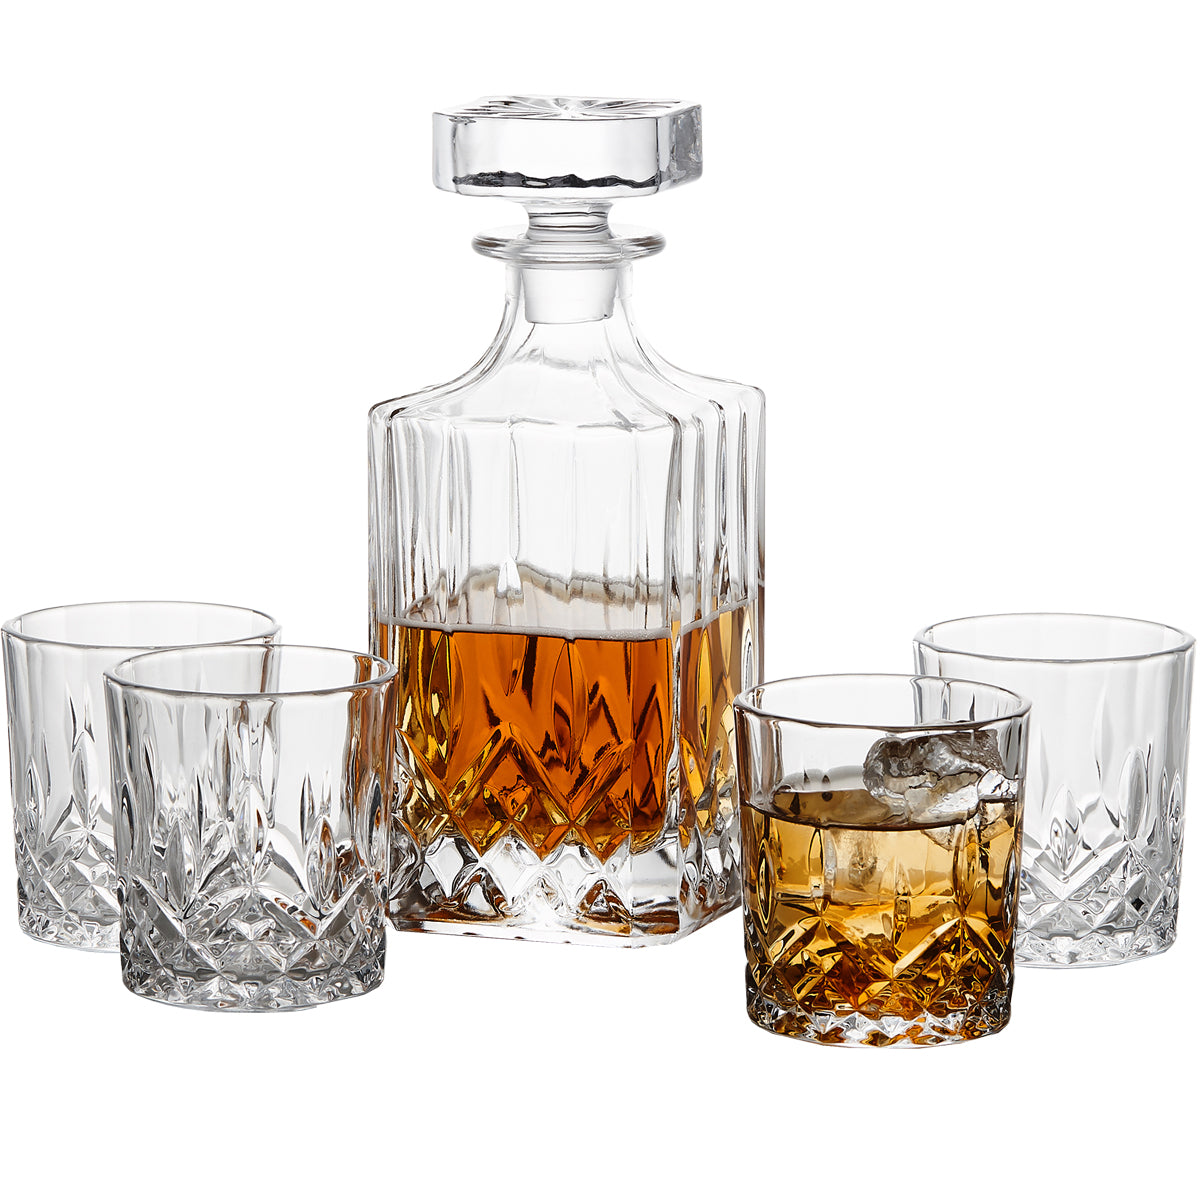 GoodGlassware Whiskey Decanter and Glasses Set (5-Piece Set)